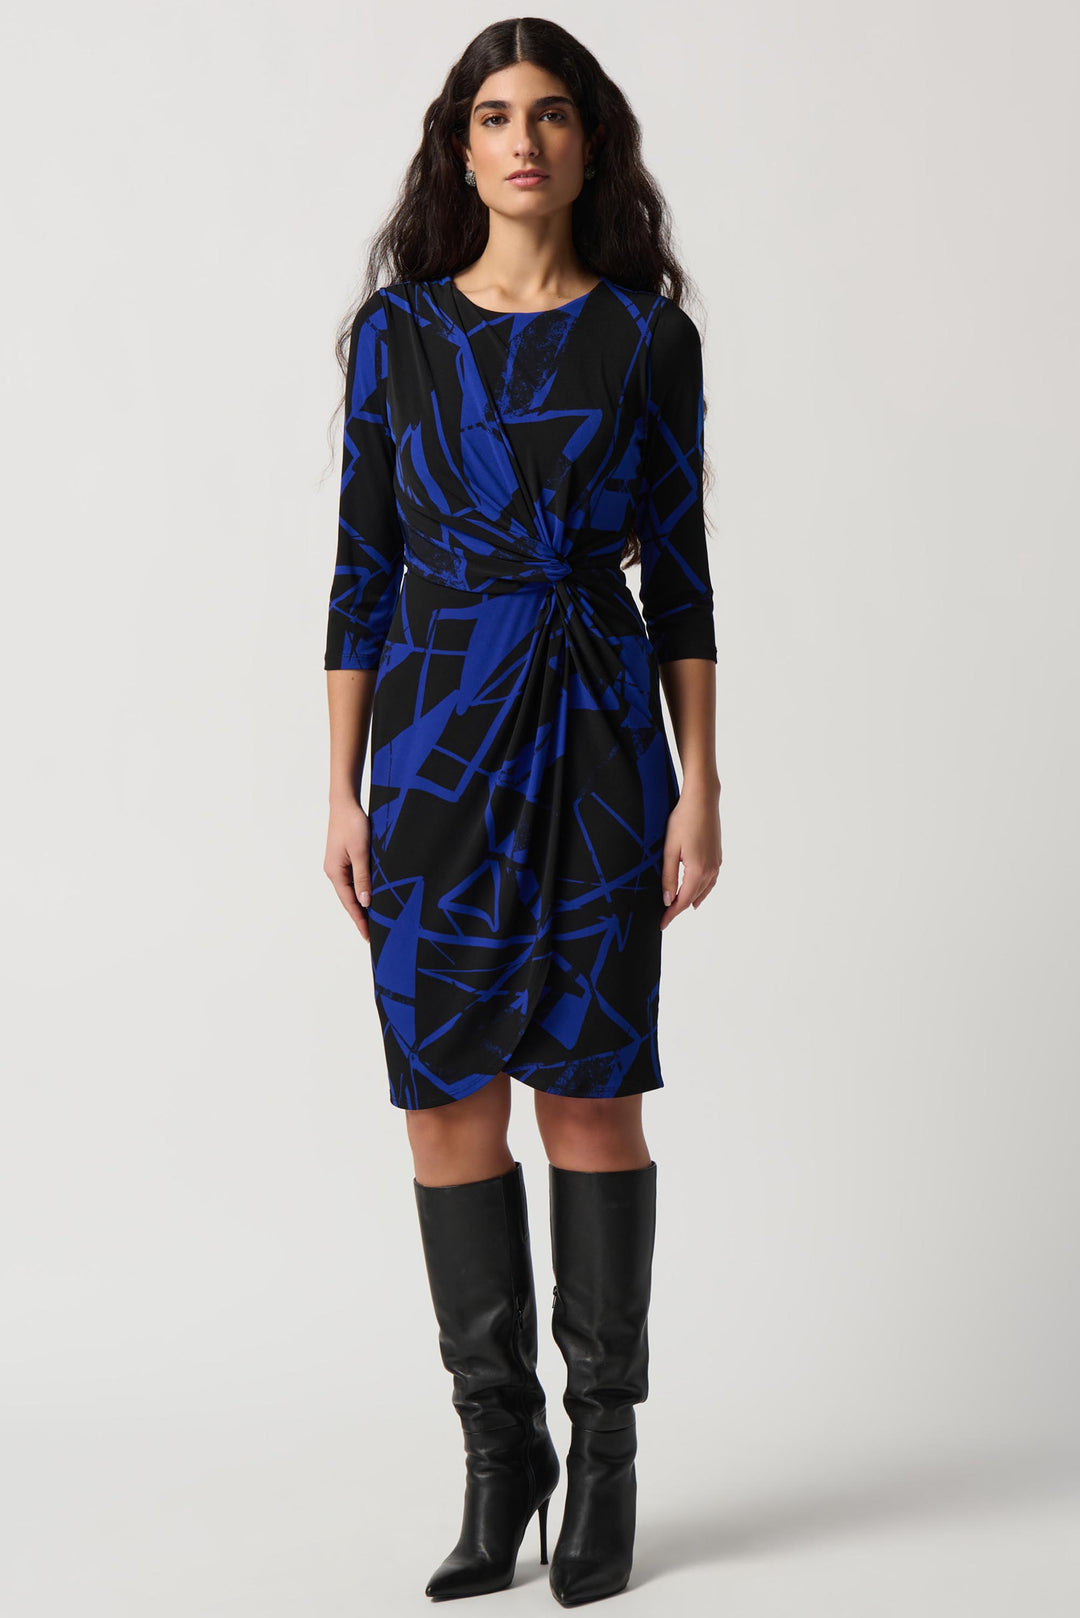 "Joseph Ribkoff Black/Royal Sapphire Geometric Print Silky Knit Sheath Dress Style 234059"